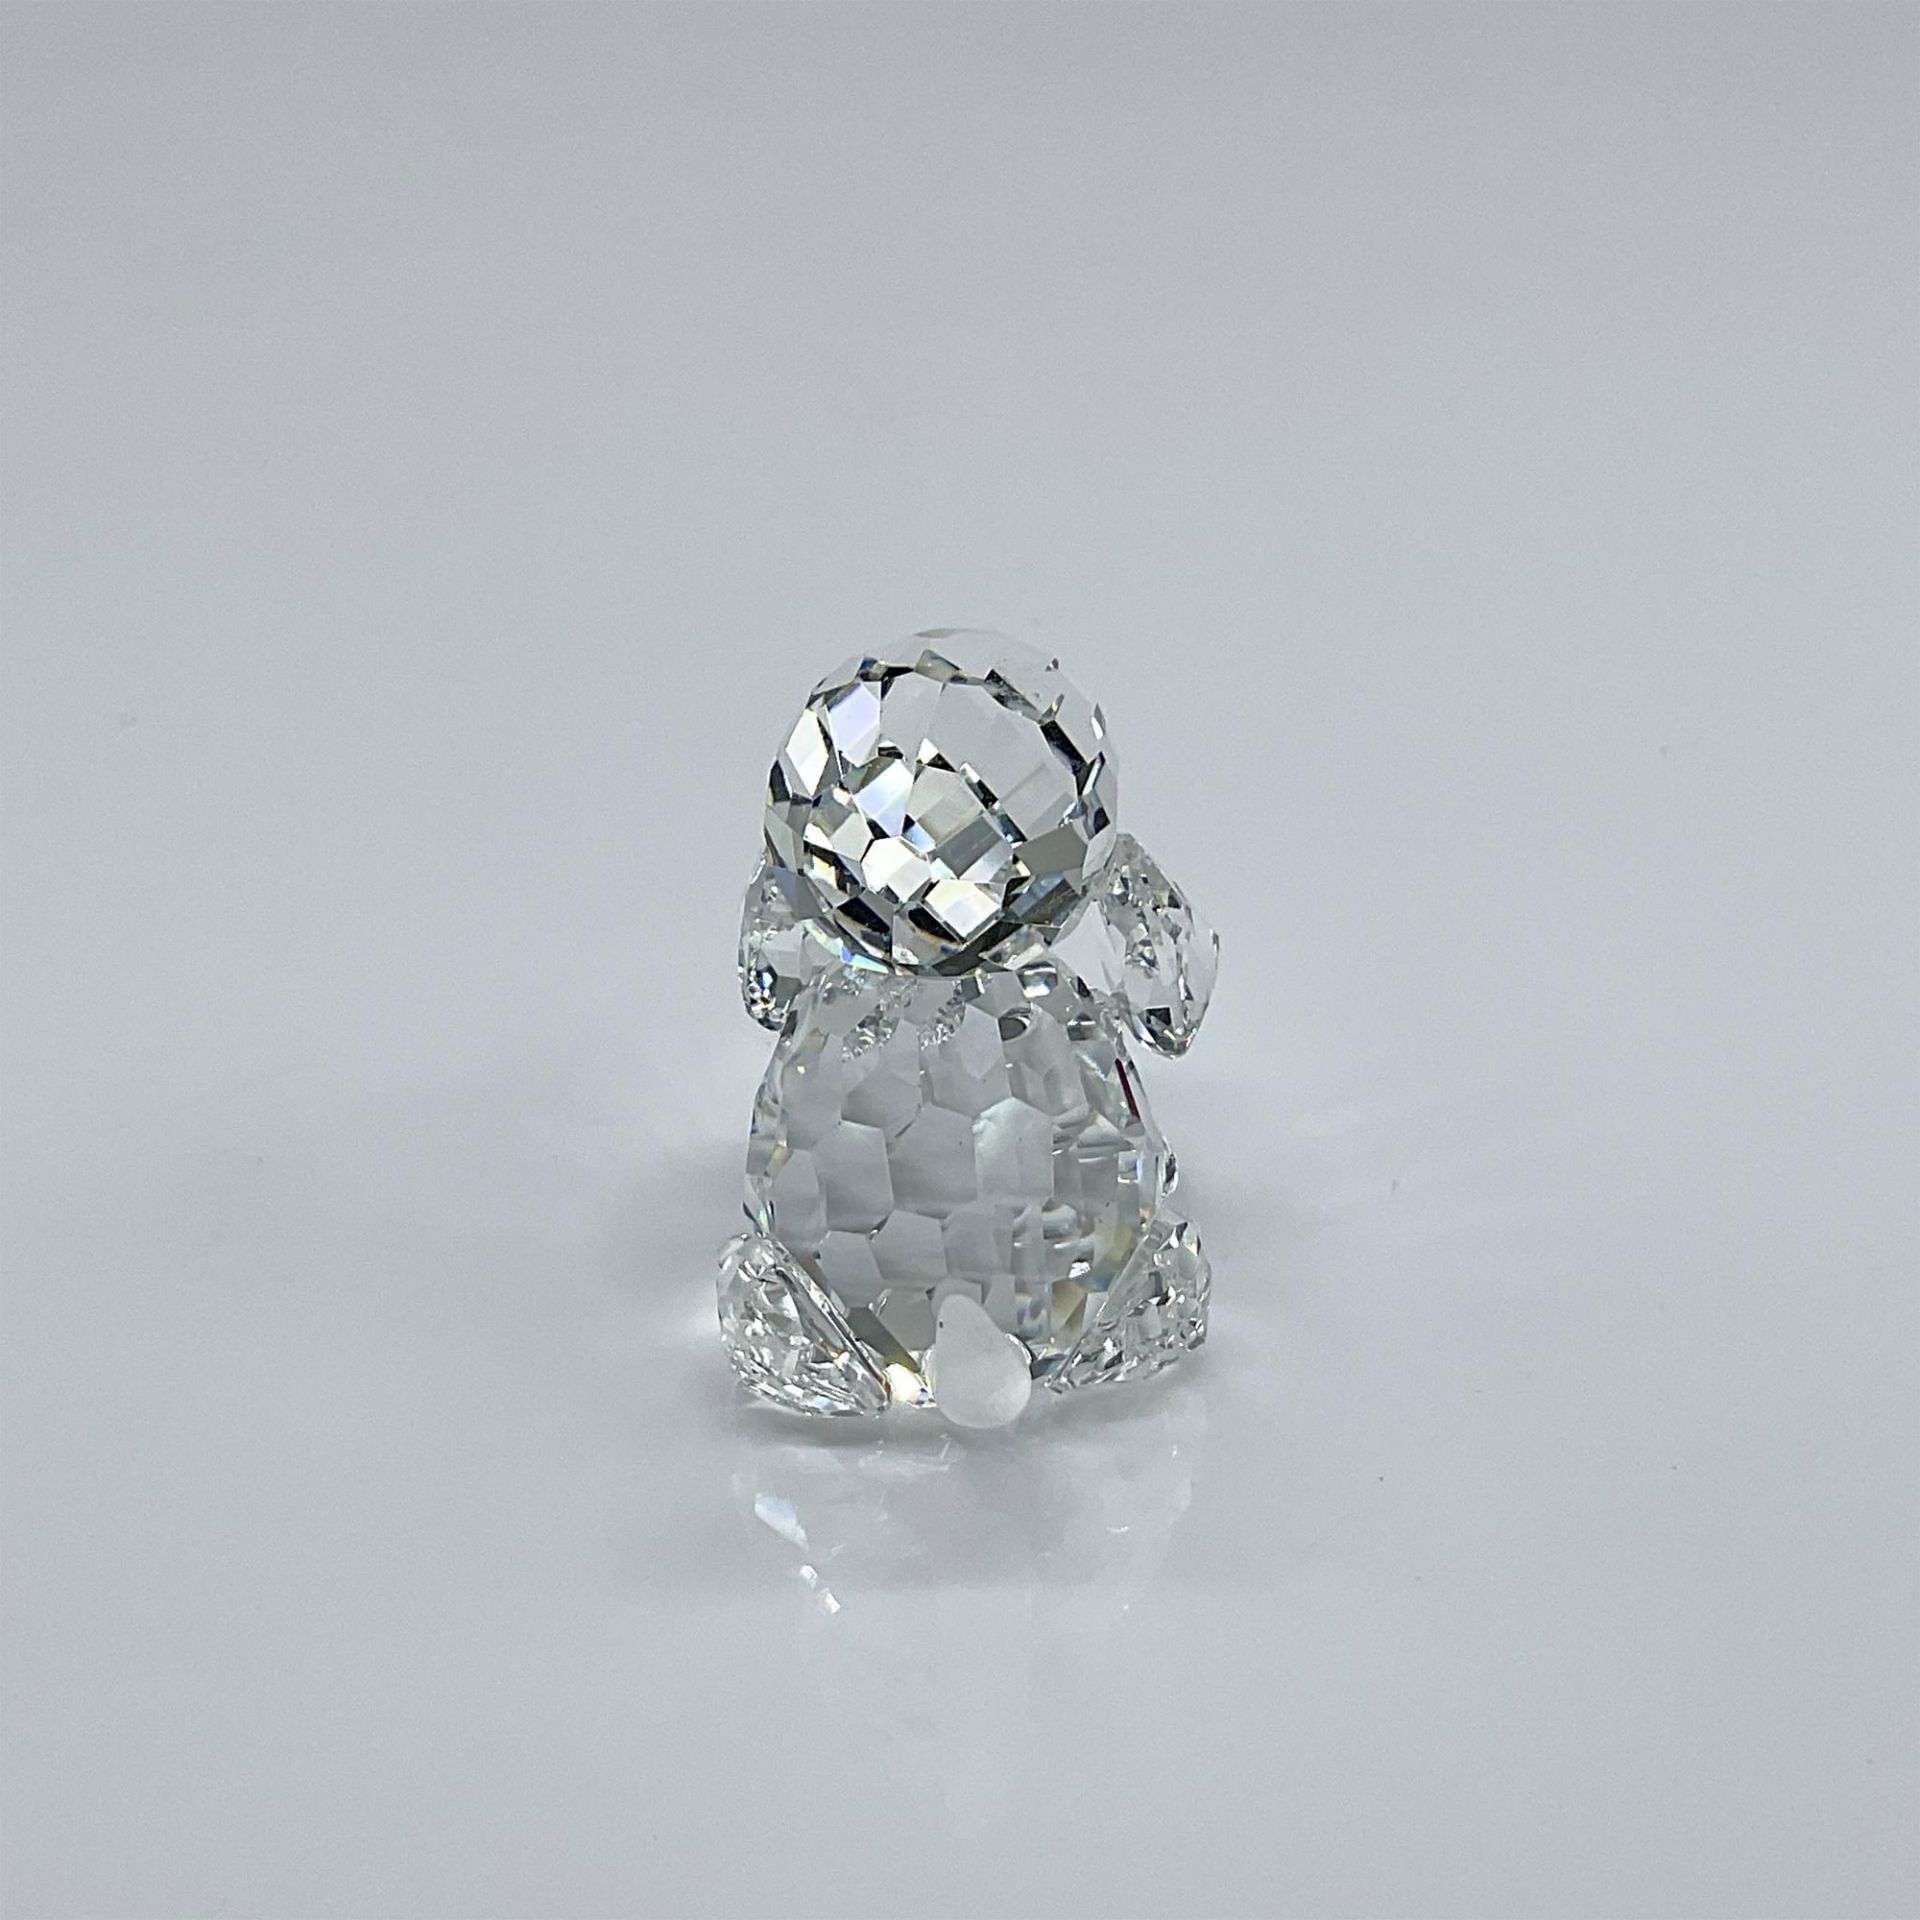 Swarovski Crystal Figurine, Beagle Puppy Sitting - Image 3 of 4